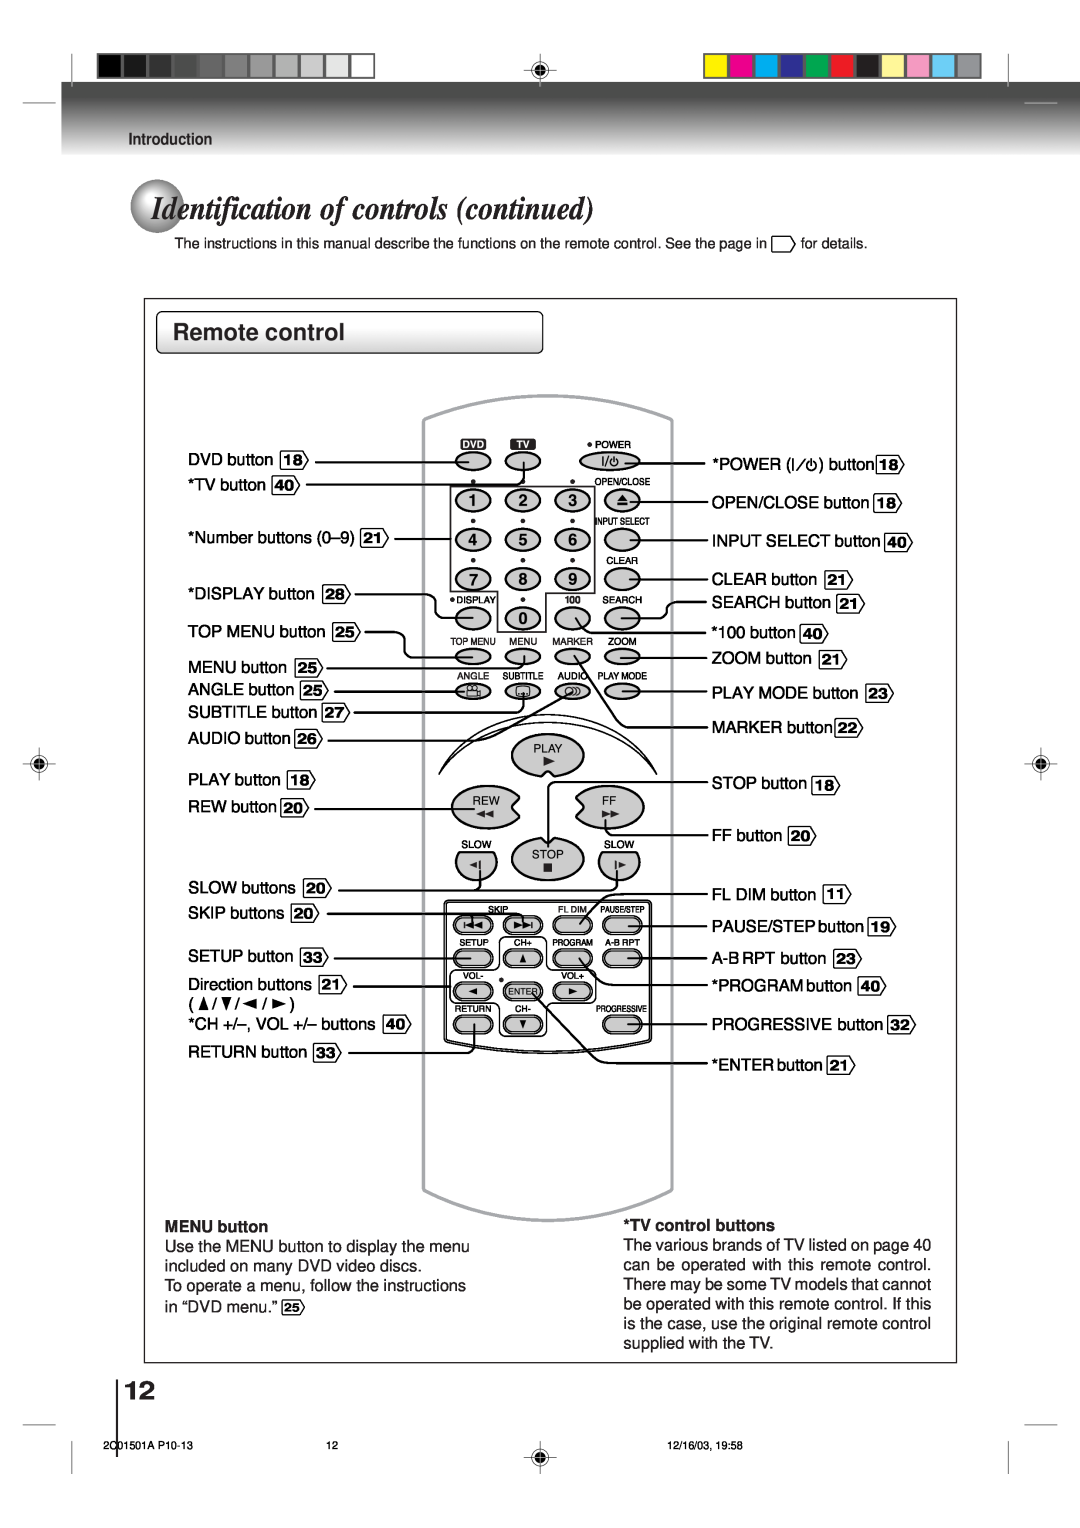 Toshiba SD-K740SU owner manual Identification of controls continued, Remote control 